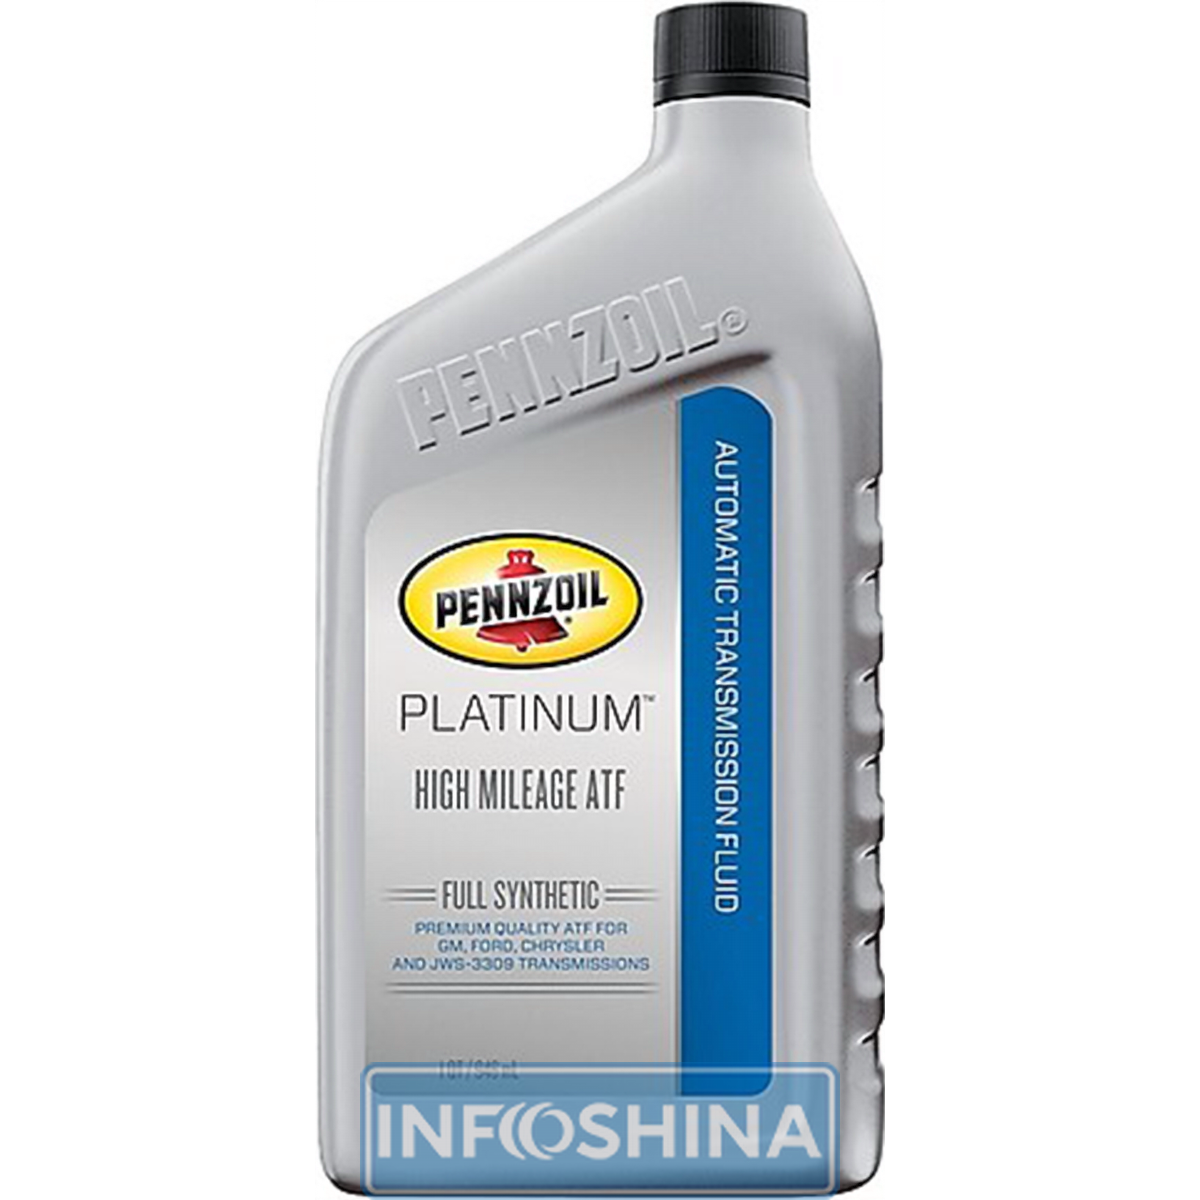 Pennzoil Platinum High Mileage ATF